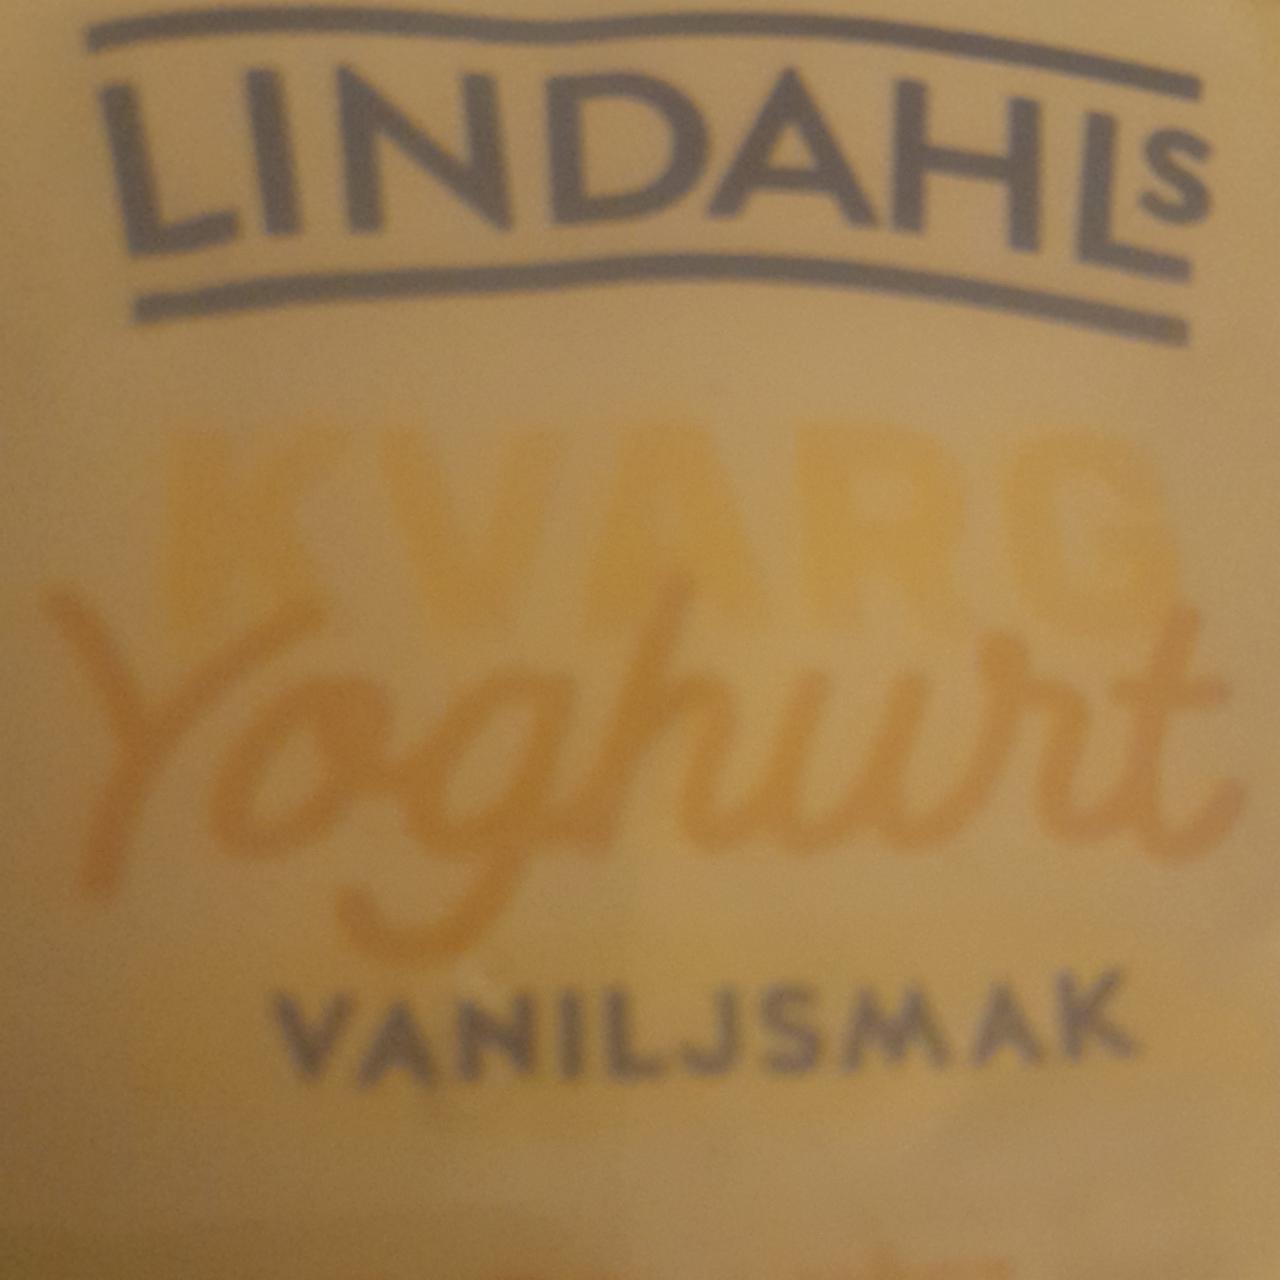 Фото - йогурт кварк со вкусом ванили Lindahls